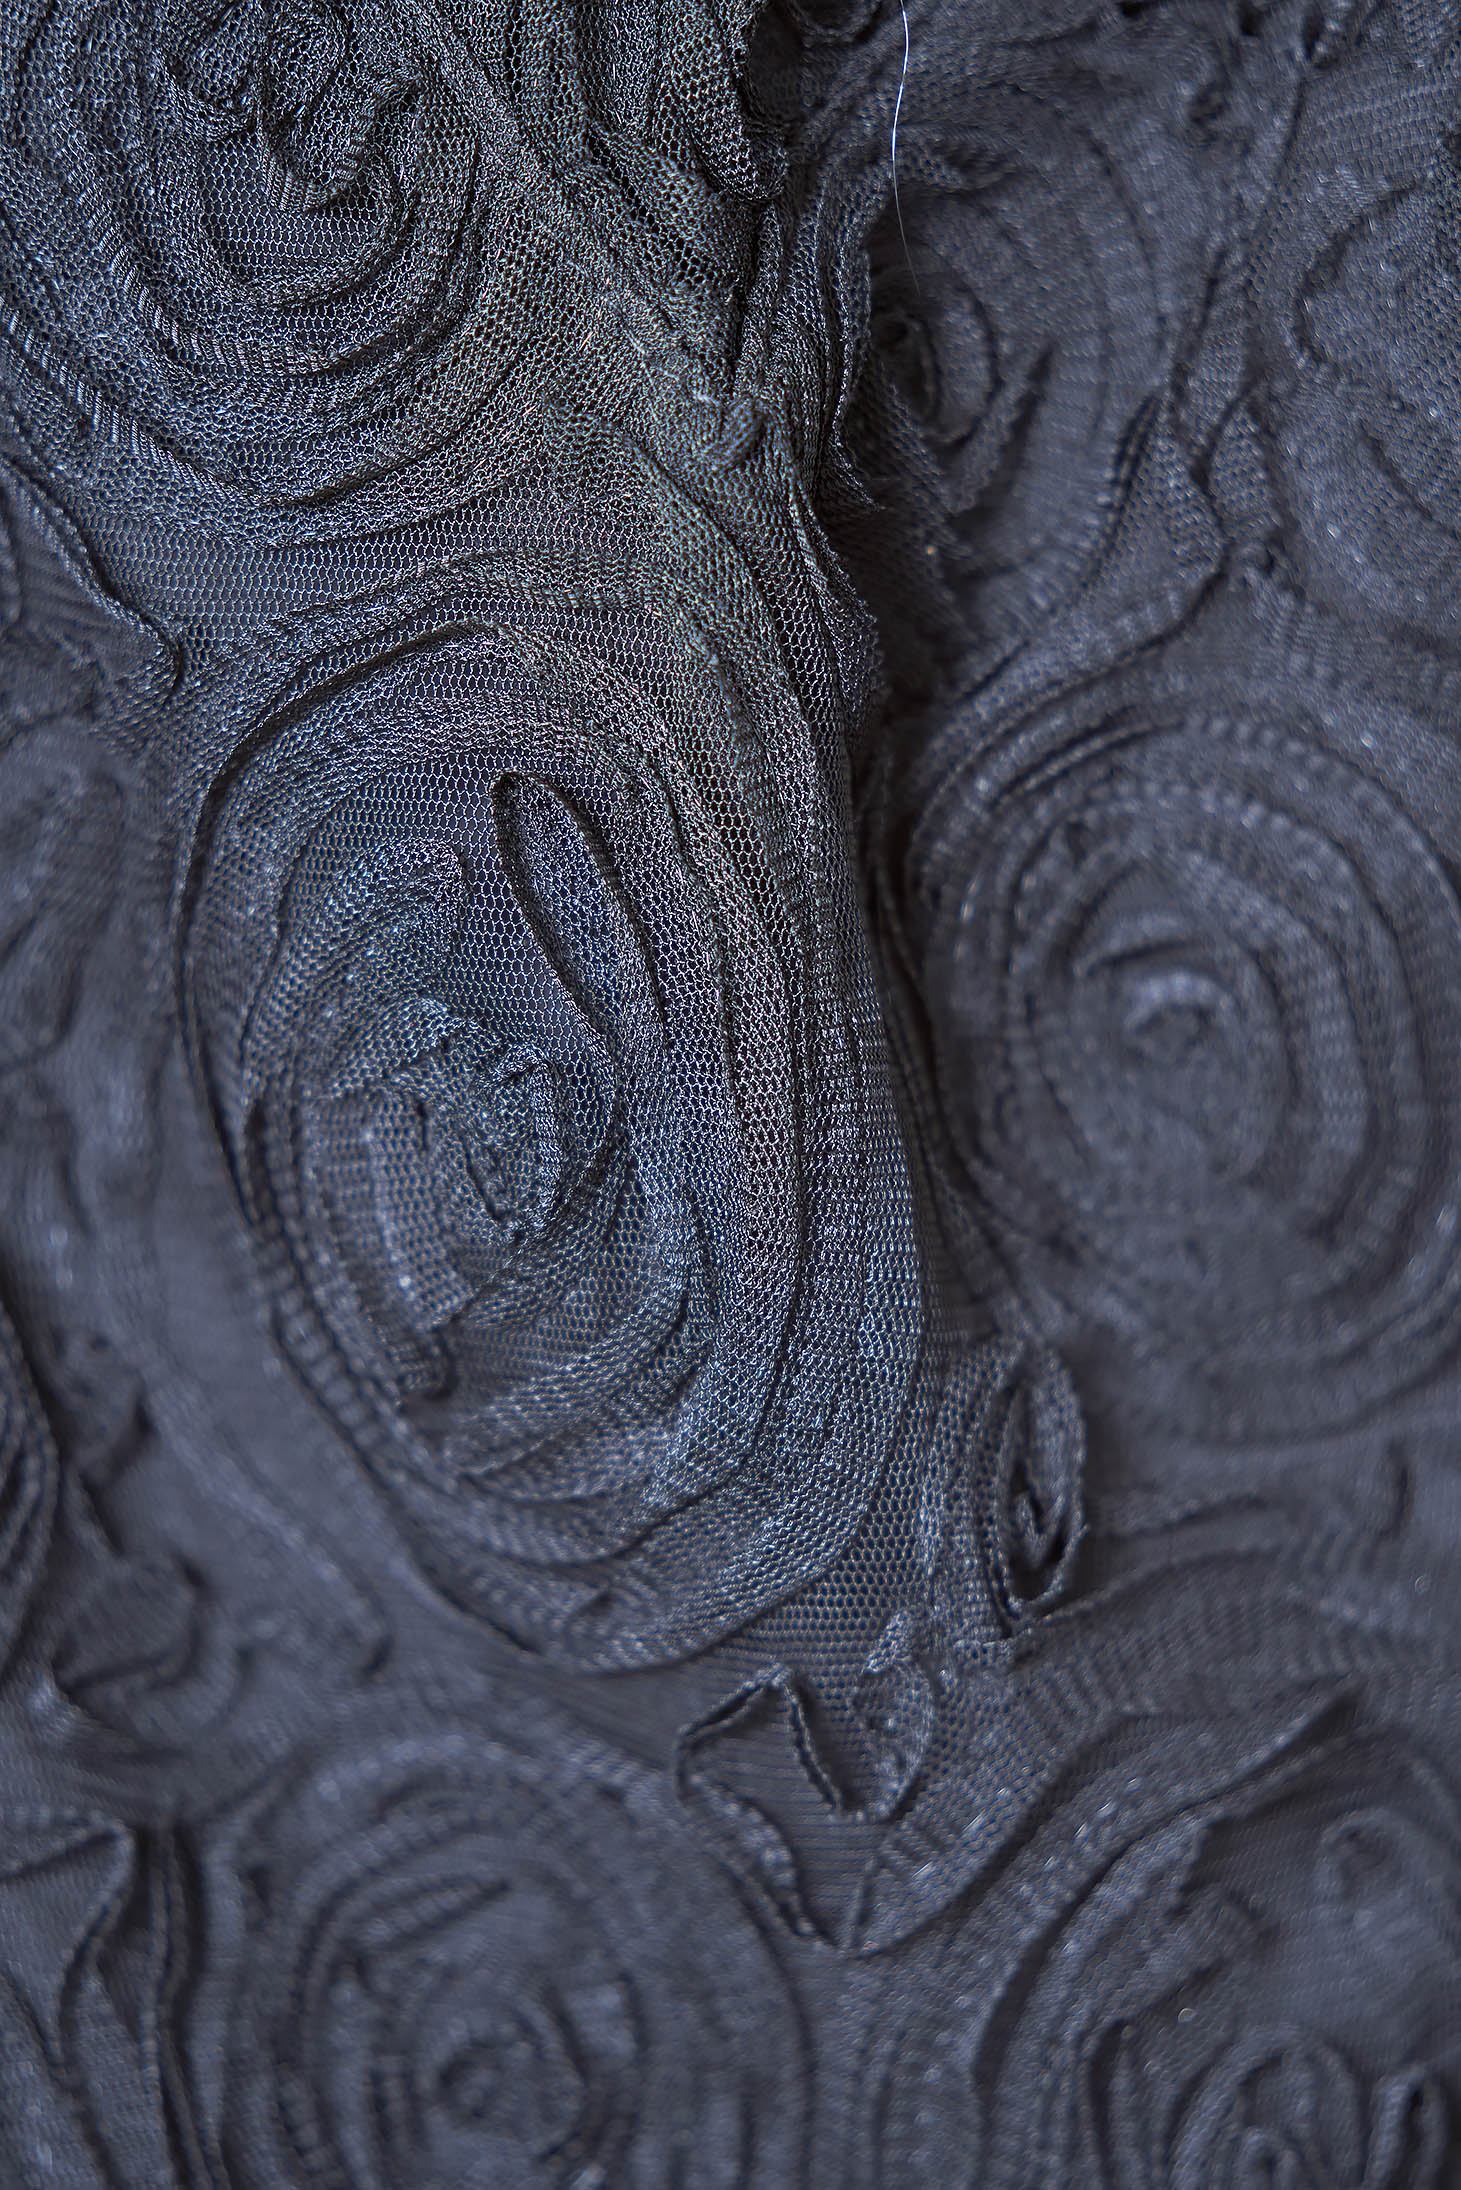 Fekete midi harang ruha tüllből 3d virágos díszítéssel - StarShinerS 3 - StarShinerS.hu